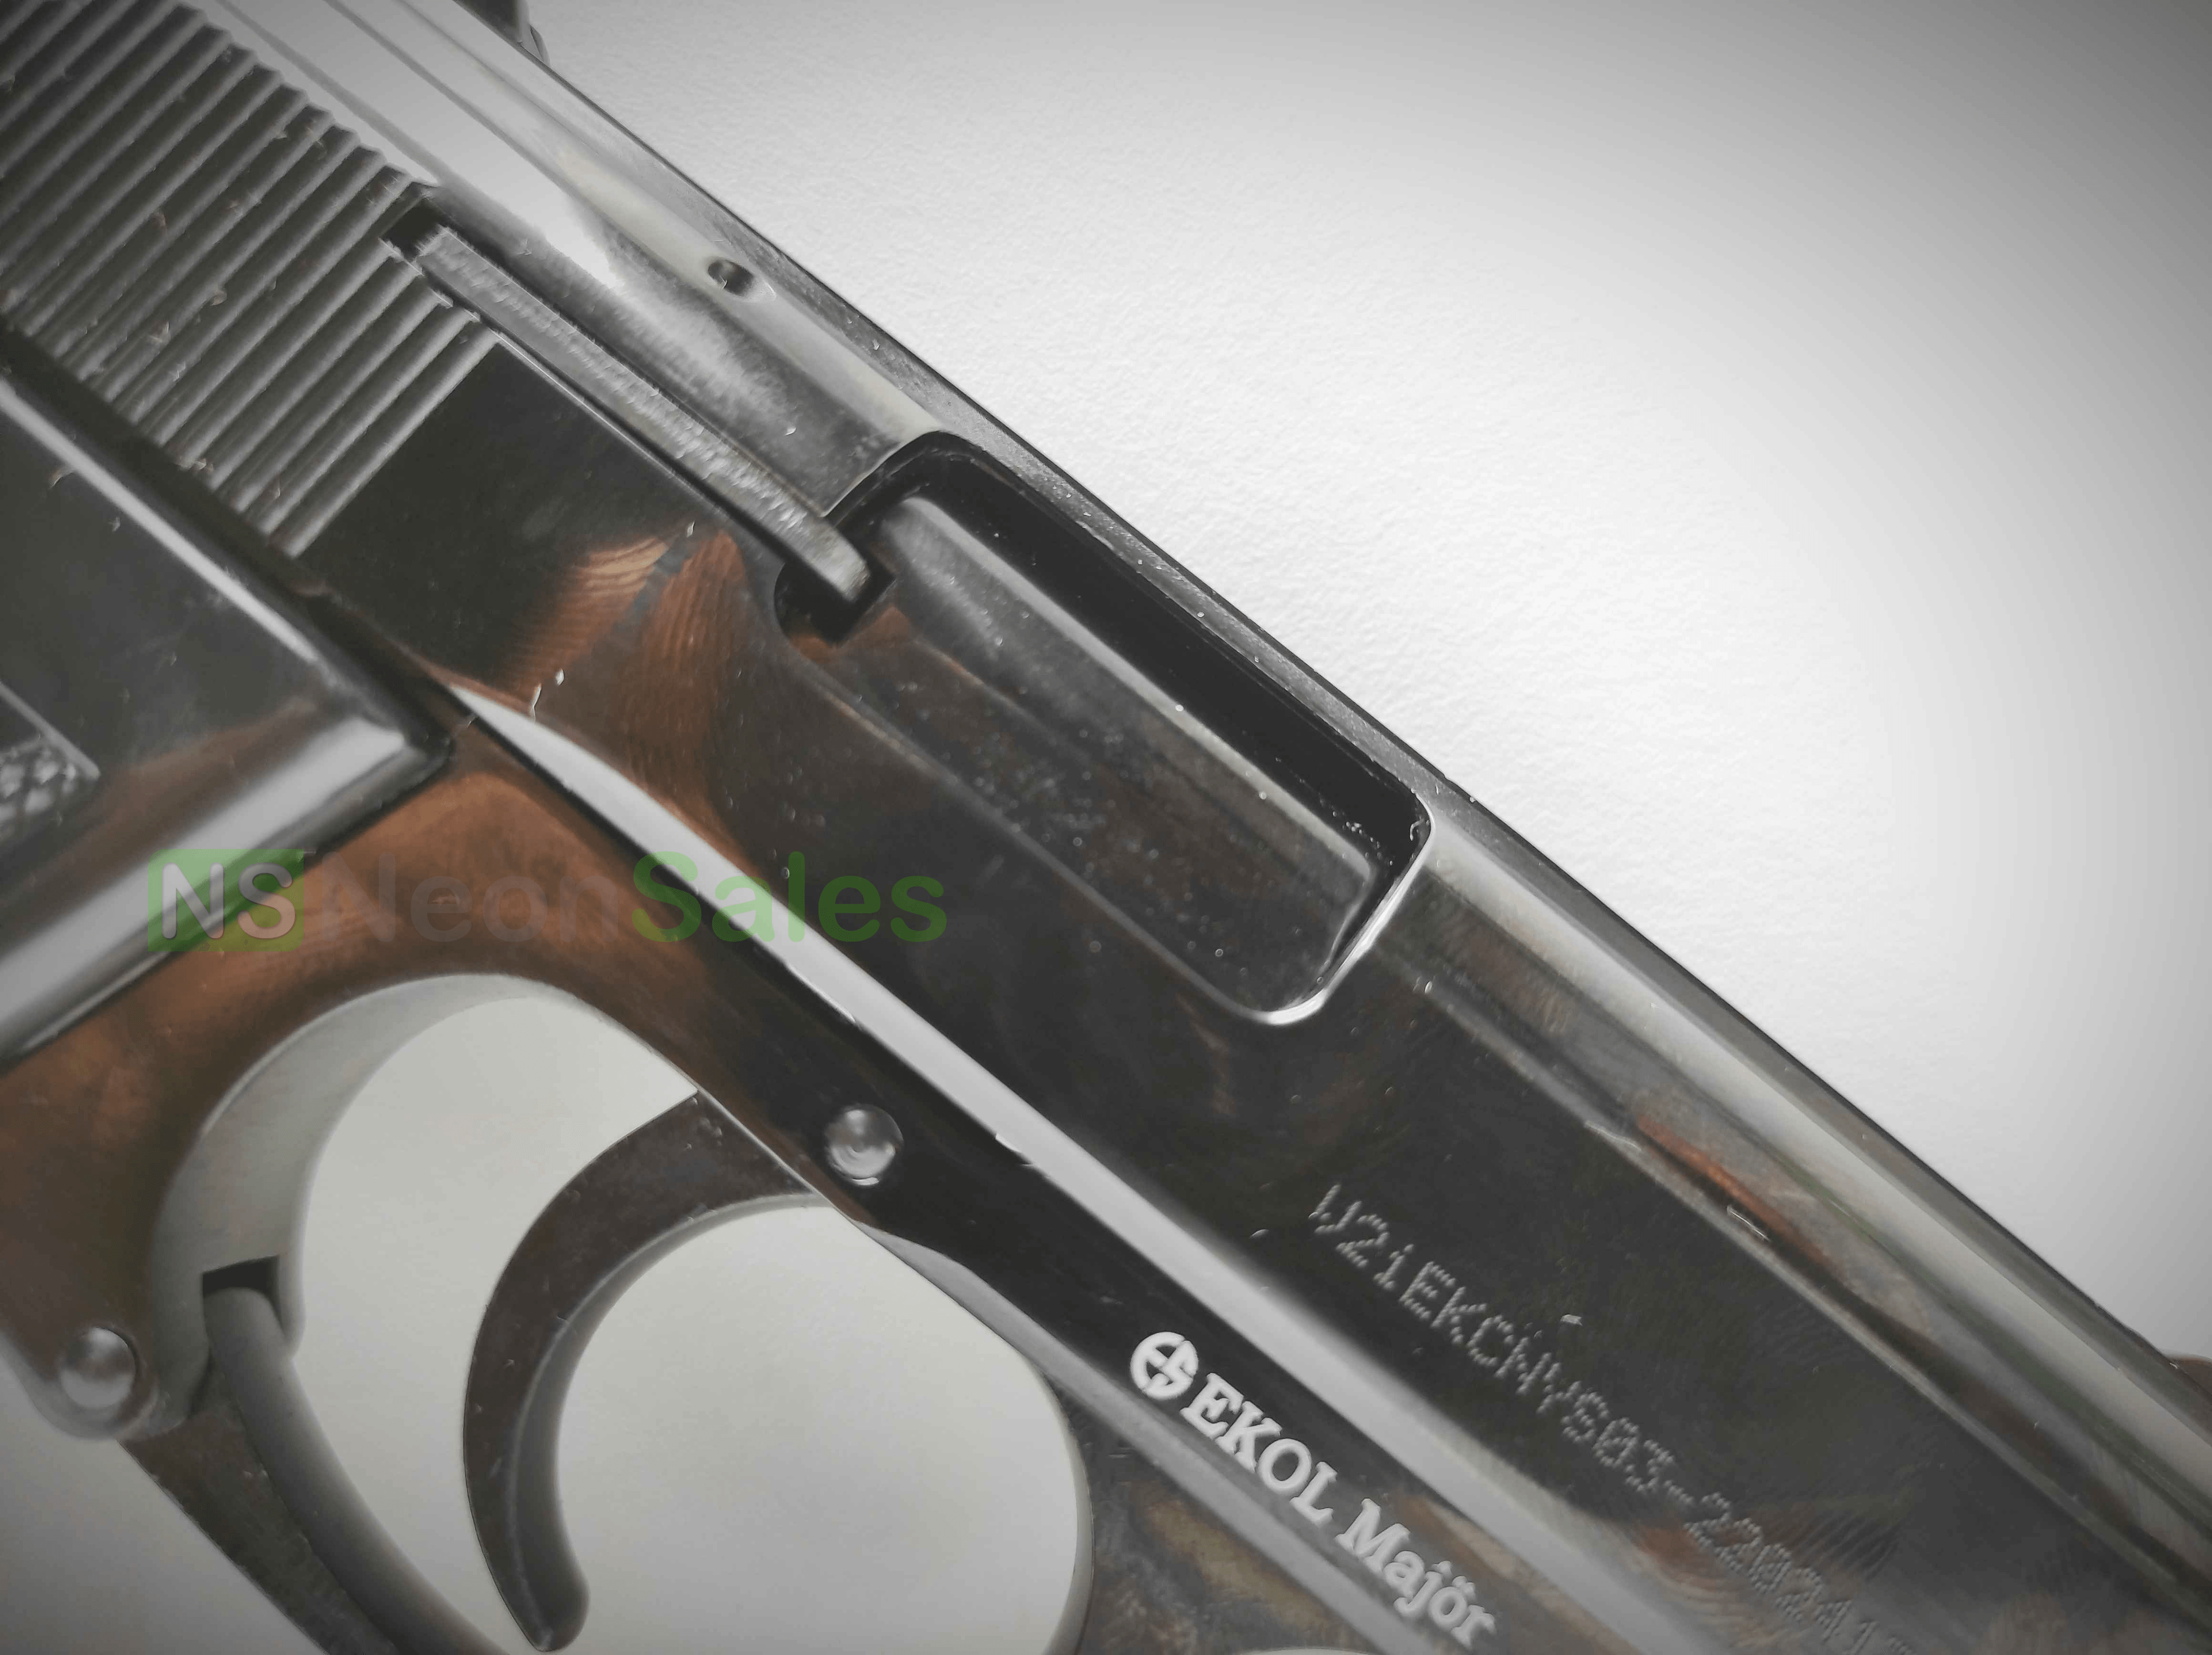 EKOL MAJOR (PM REPLICA) COMPACT BLANK GUN - BLUED